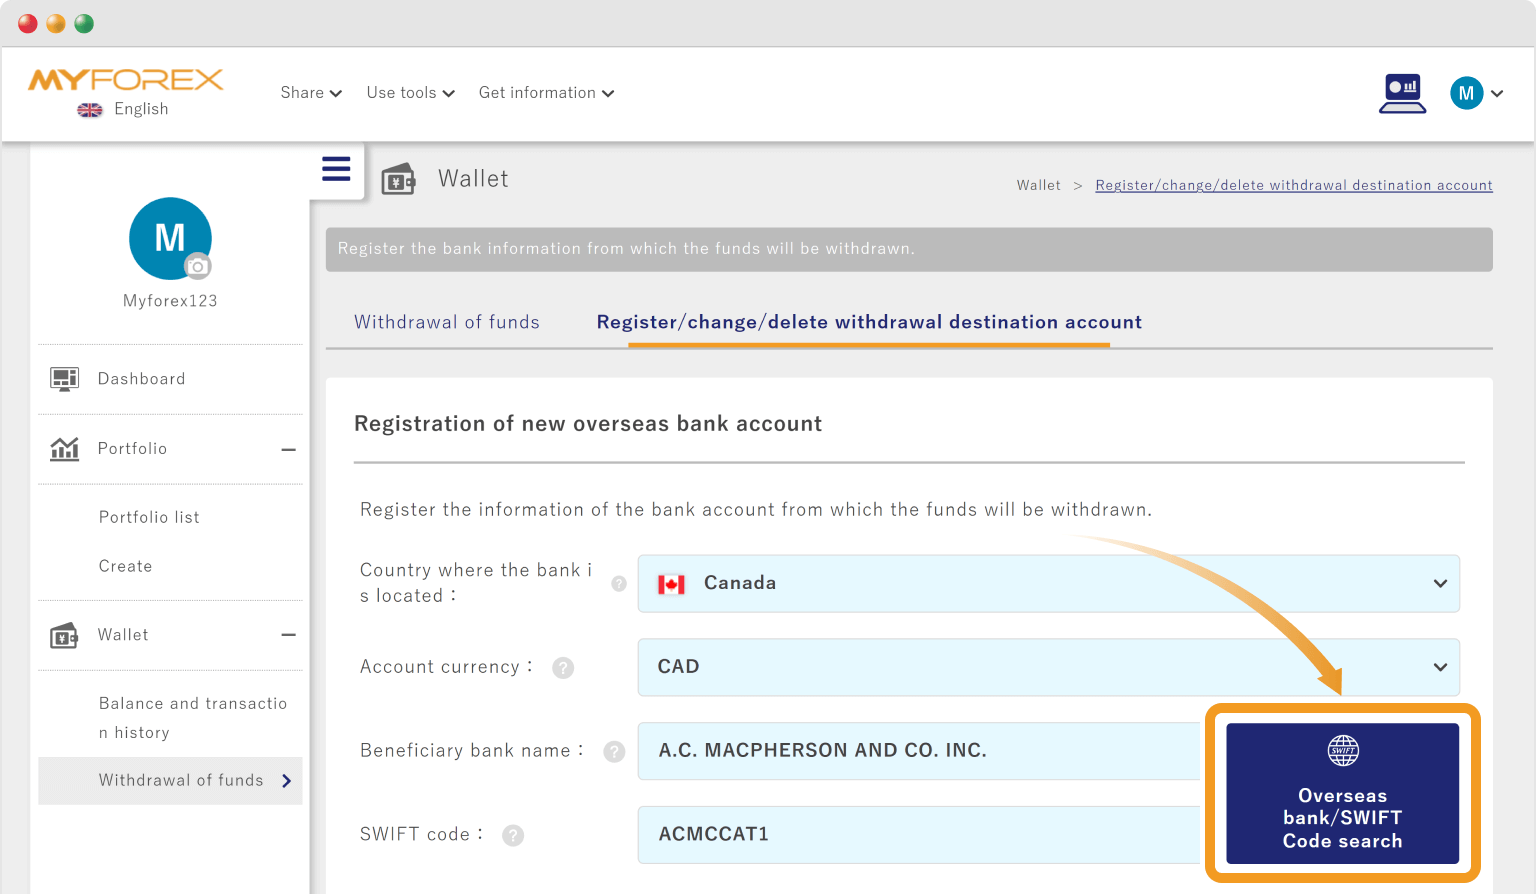 Bank account registration/SWIFT code